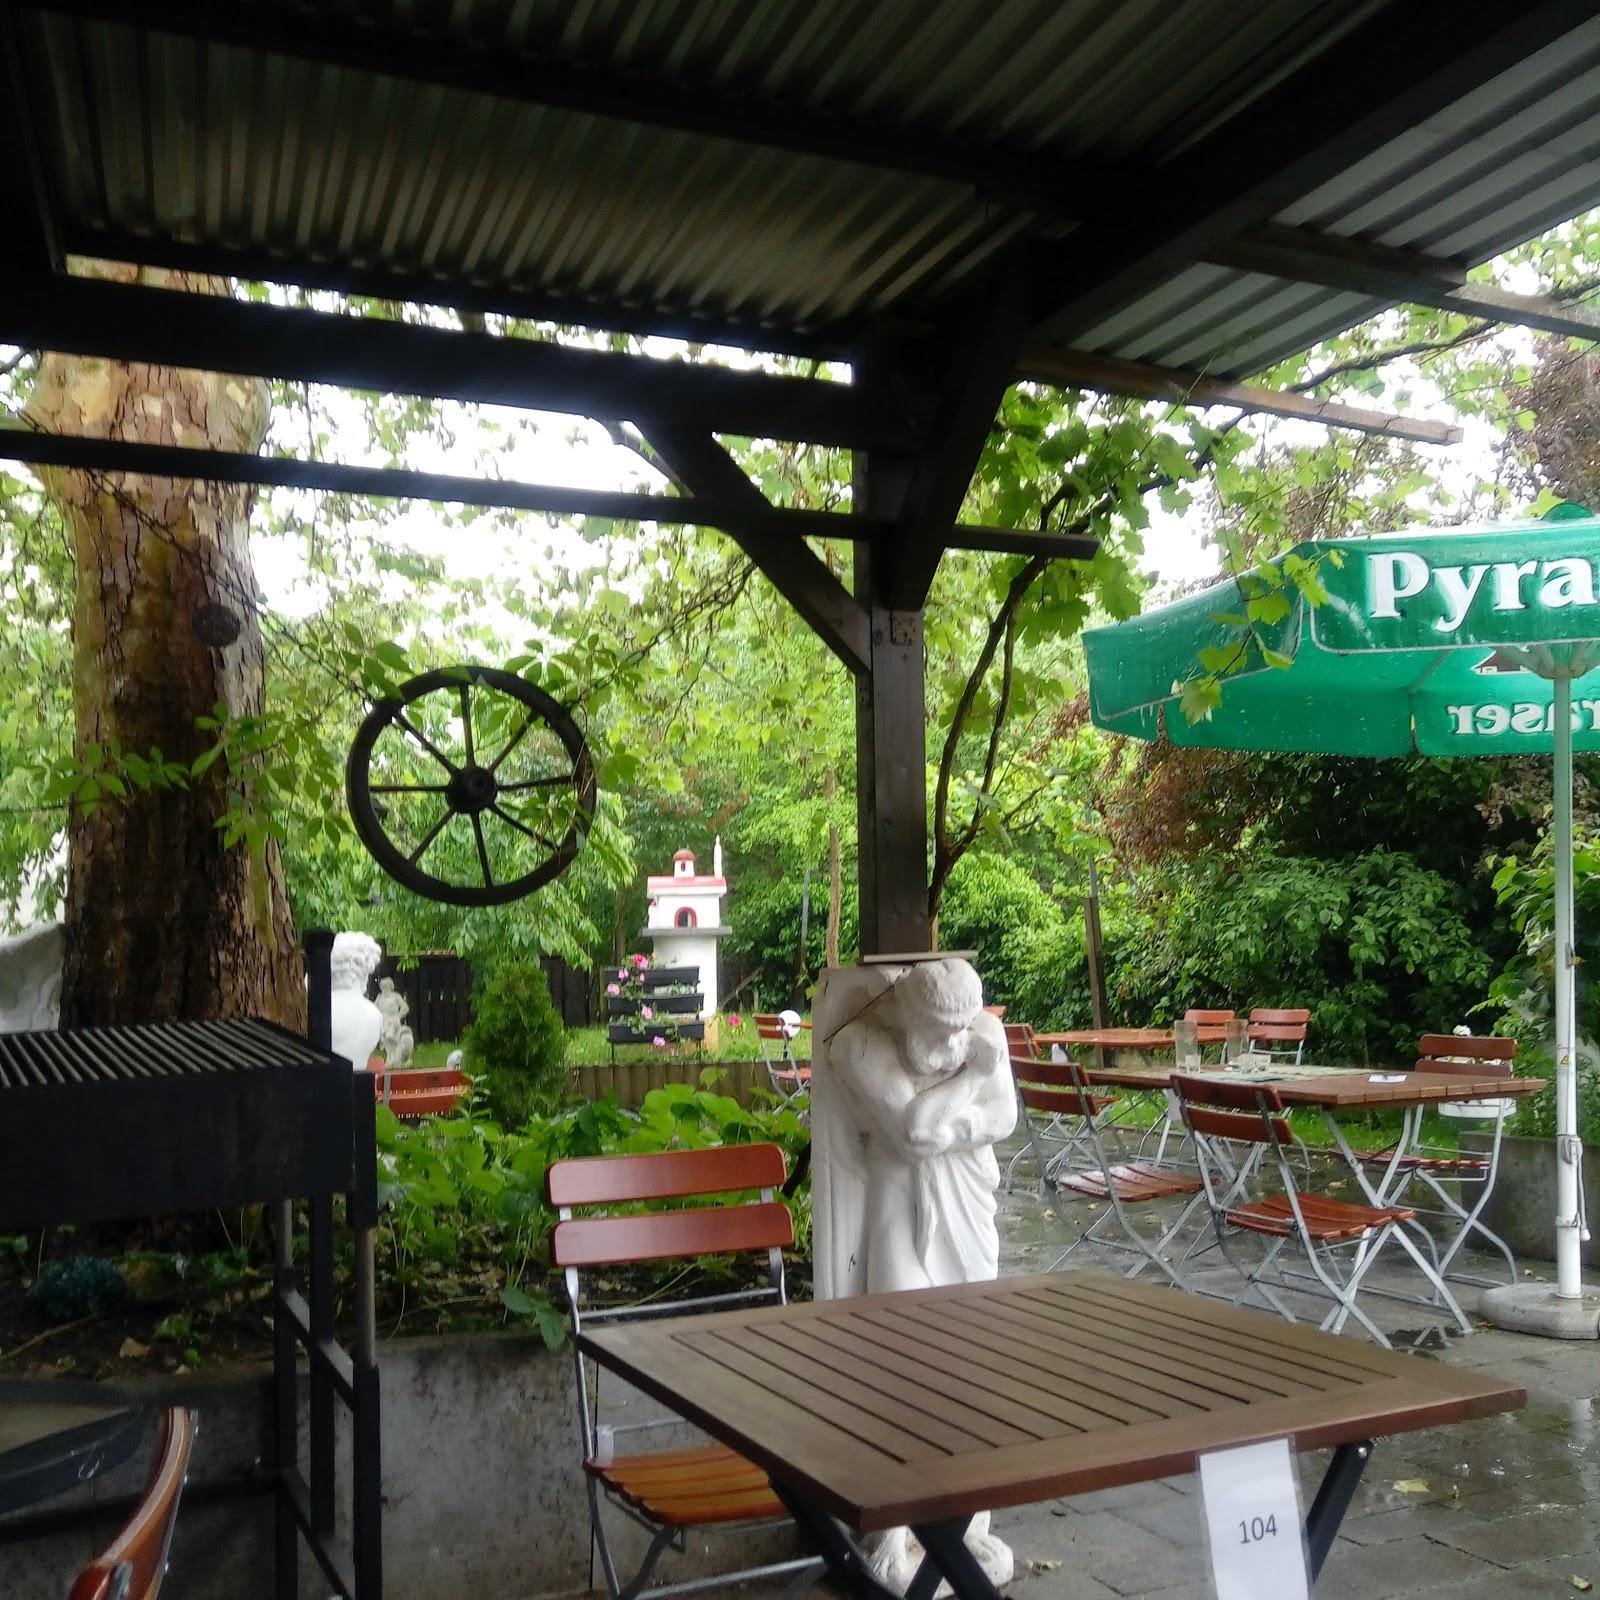 Restaurant "Olympiagarten" in Nürnberg